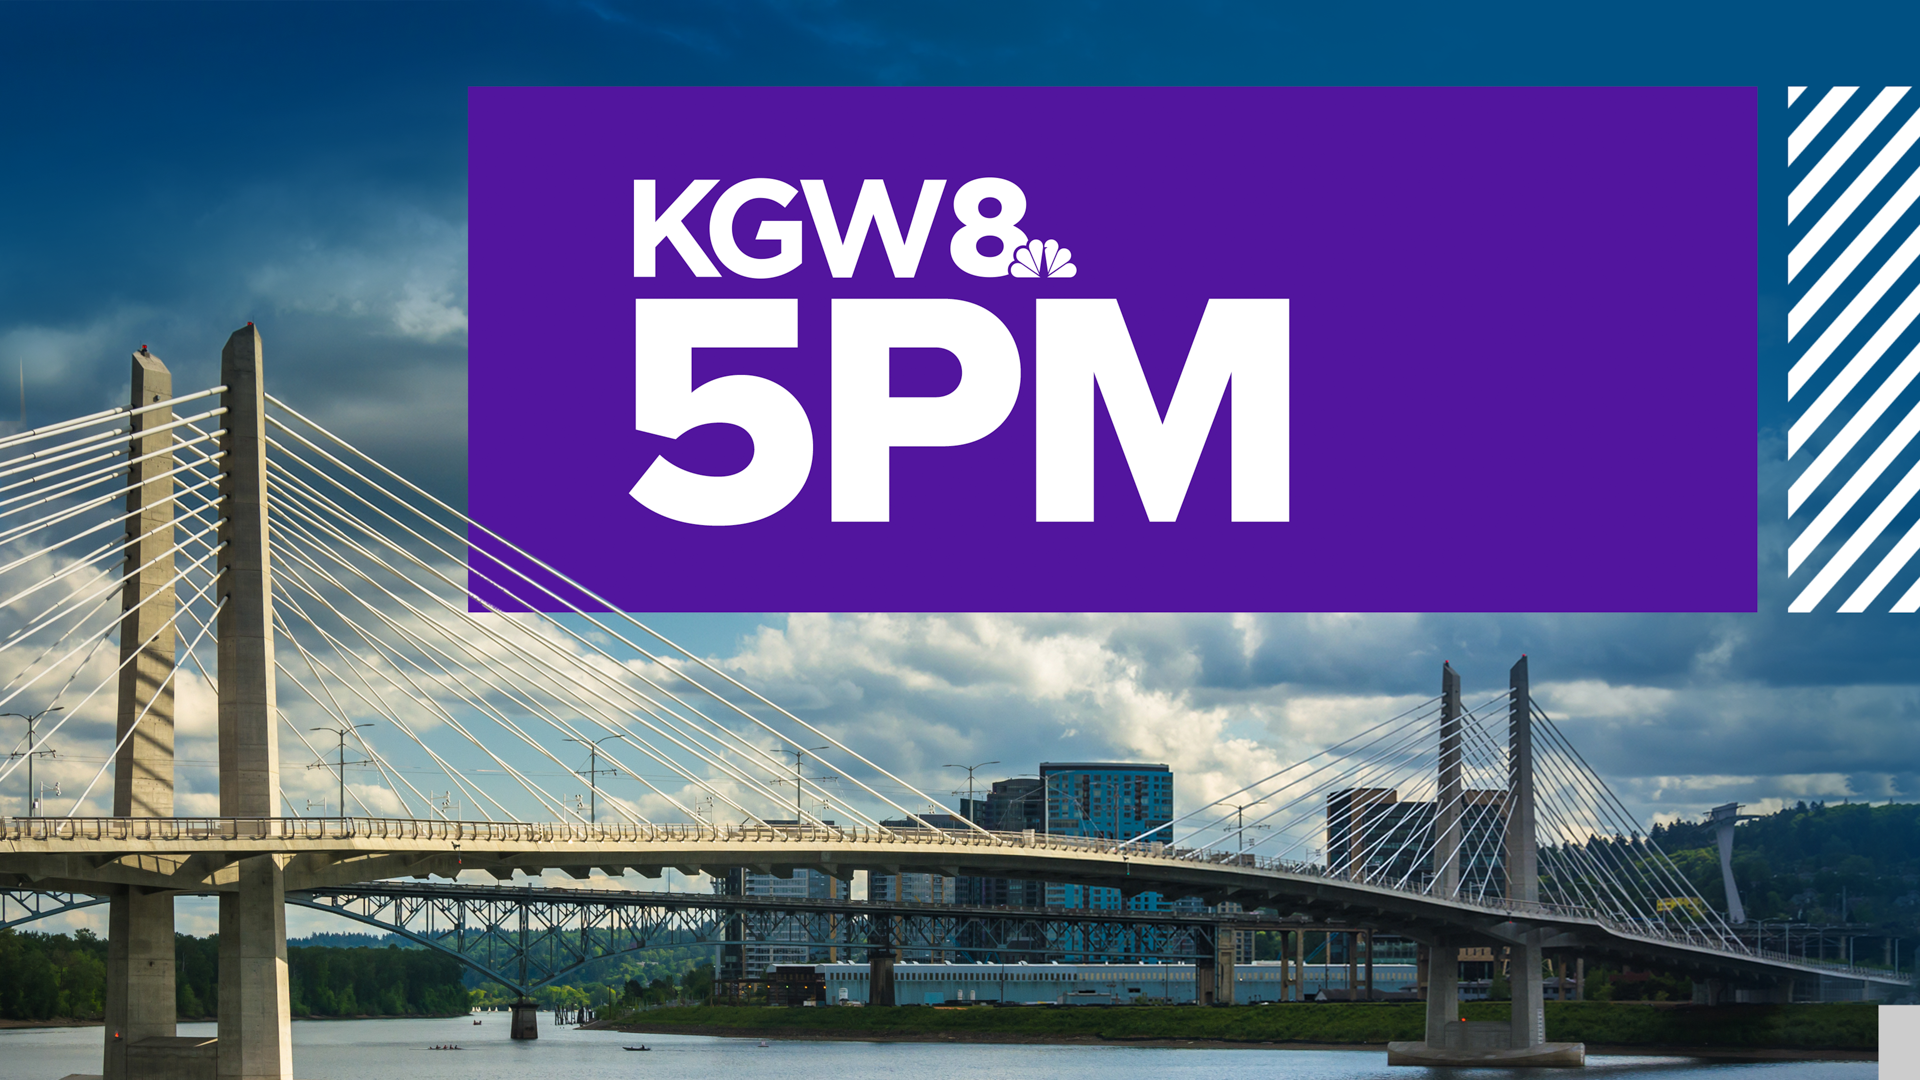 KGW News at 5, Saturday edition